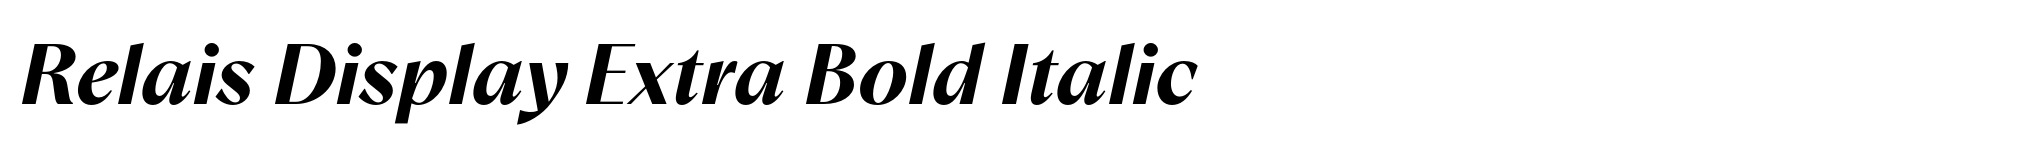 Relais Display Extra Bold Italic image